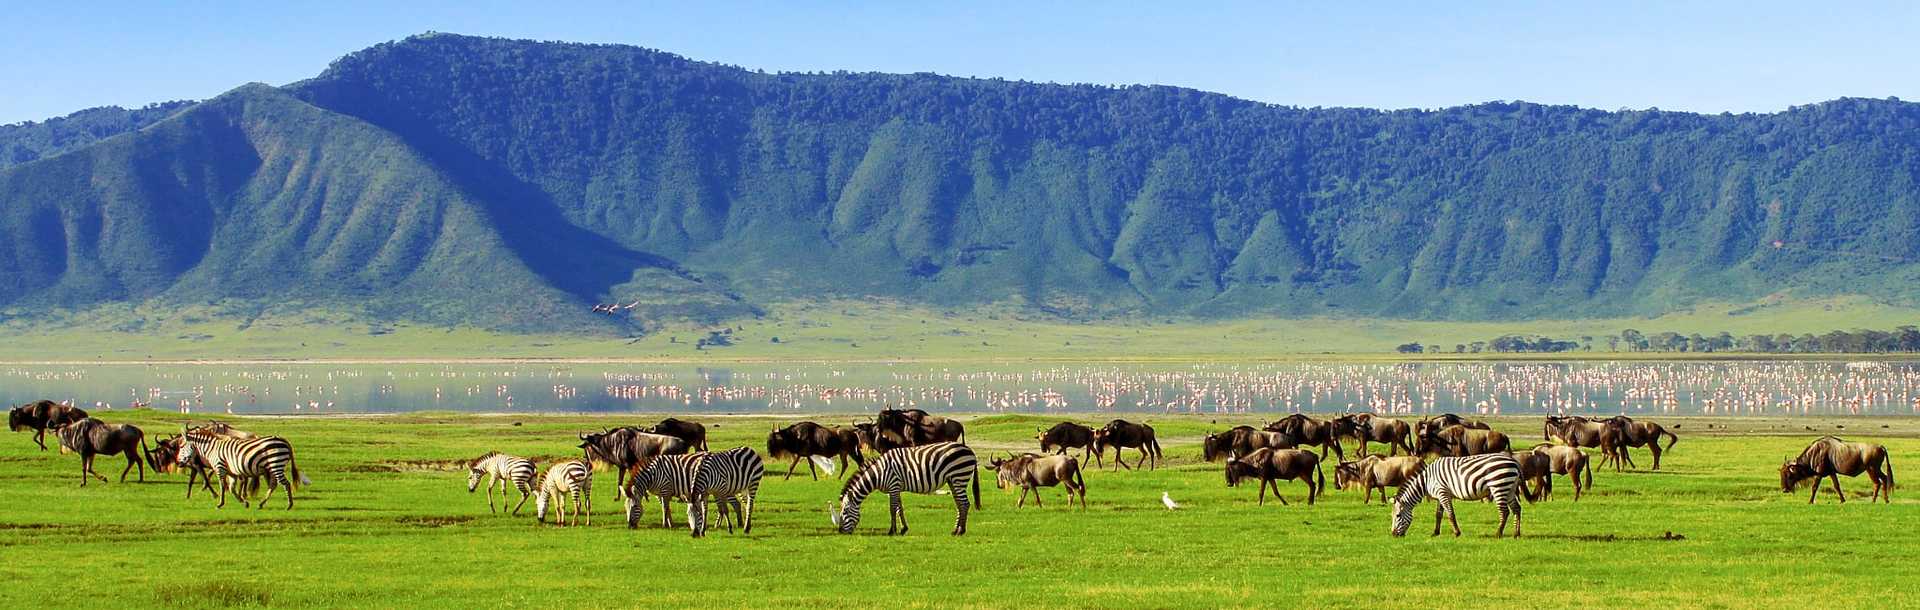 Wildebeests and zebras at Ngorongoro Crater, Tanzania